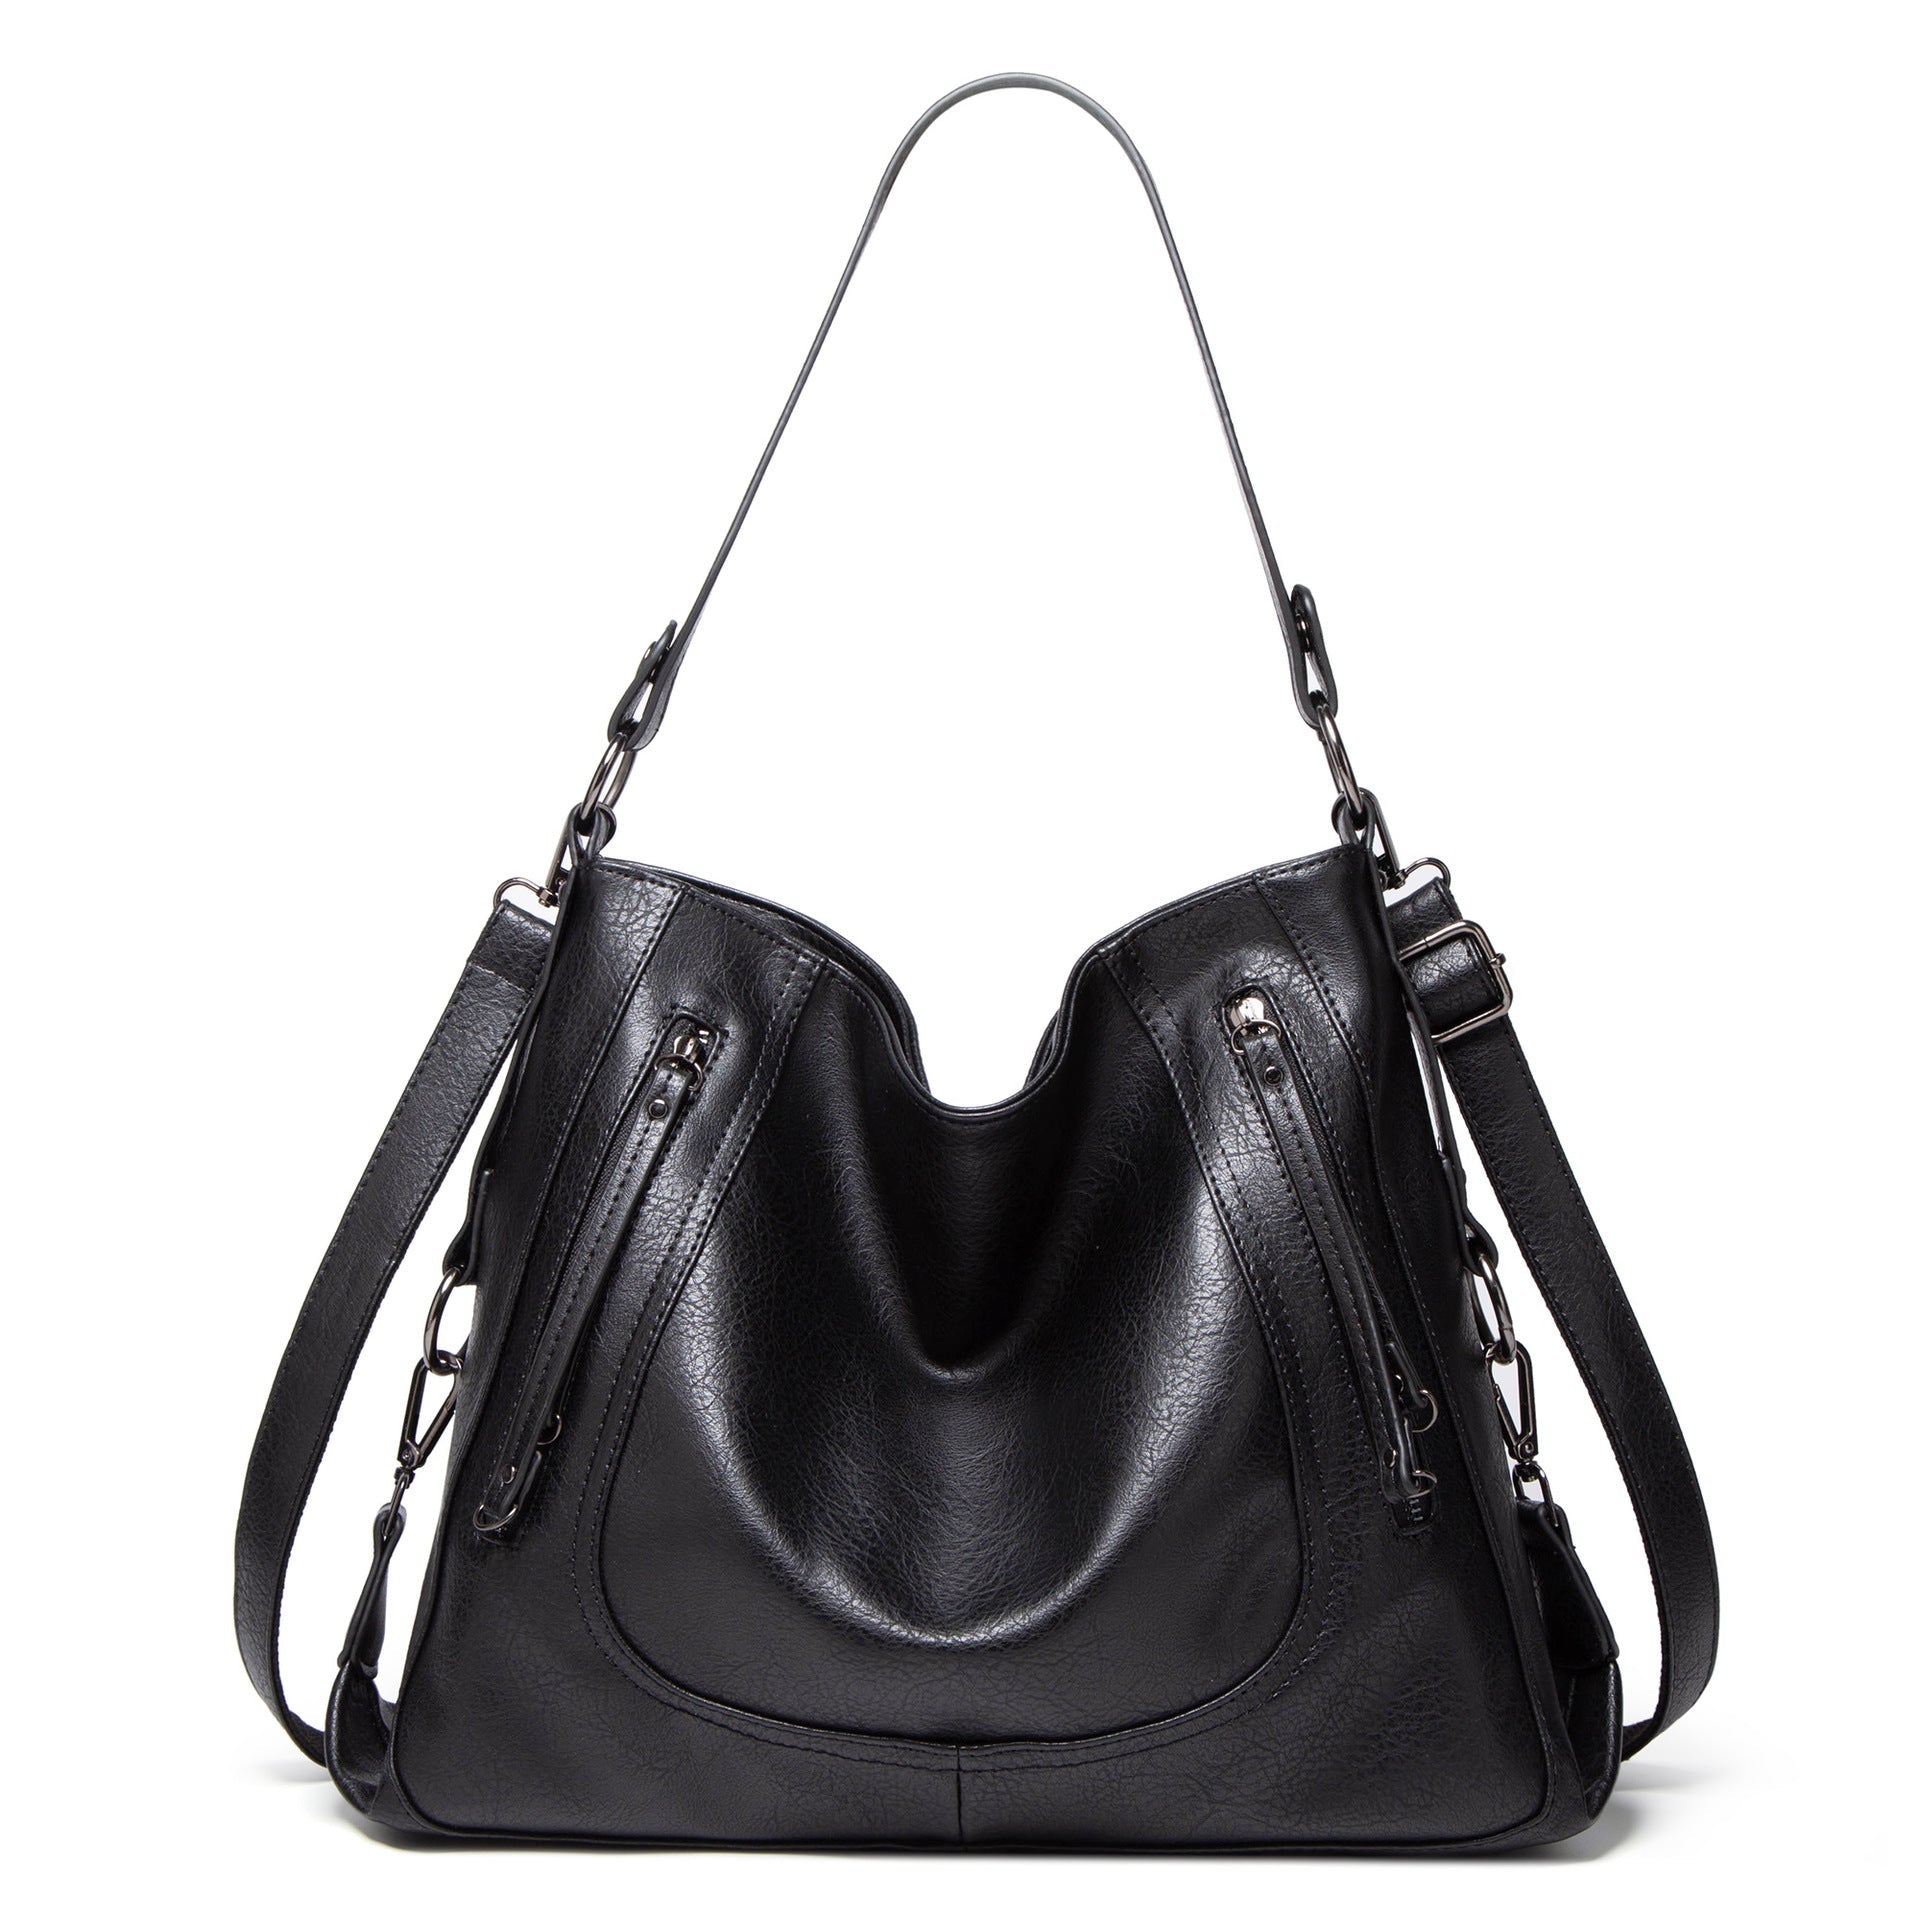 Retro Style Handbags with Spacious Design Black Beachwear Australia